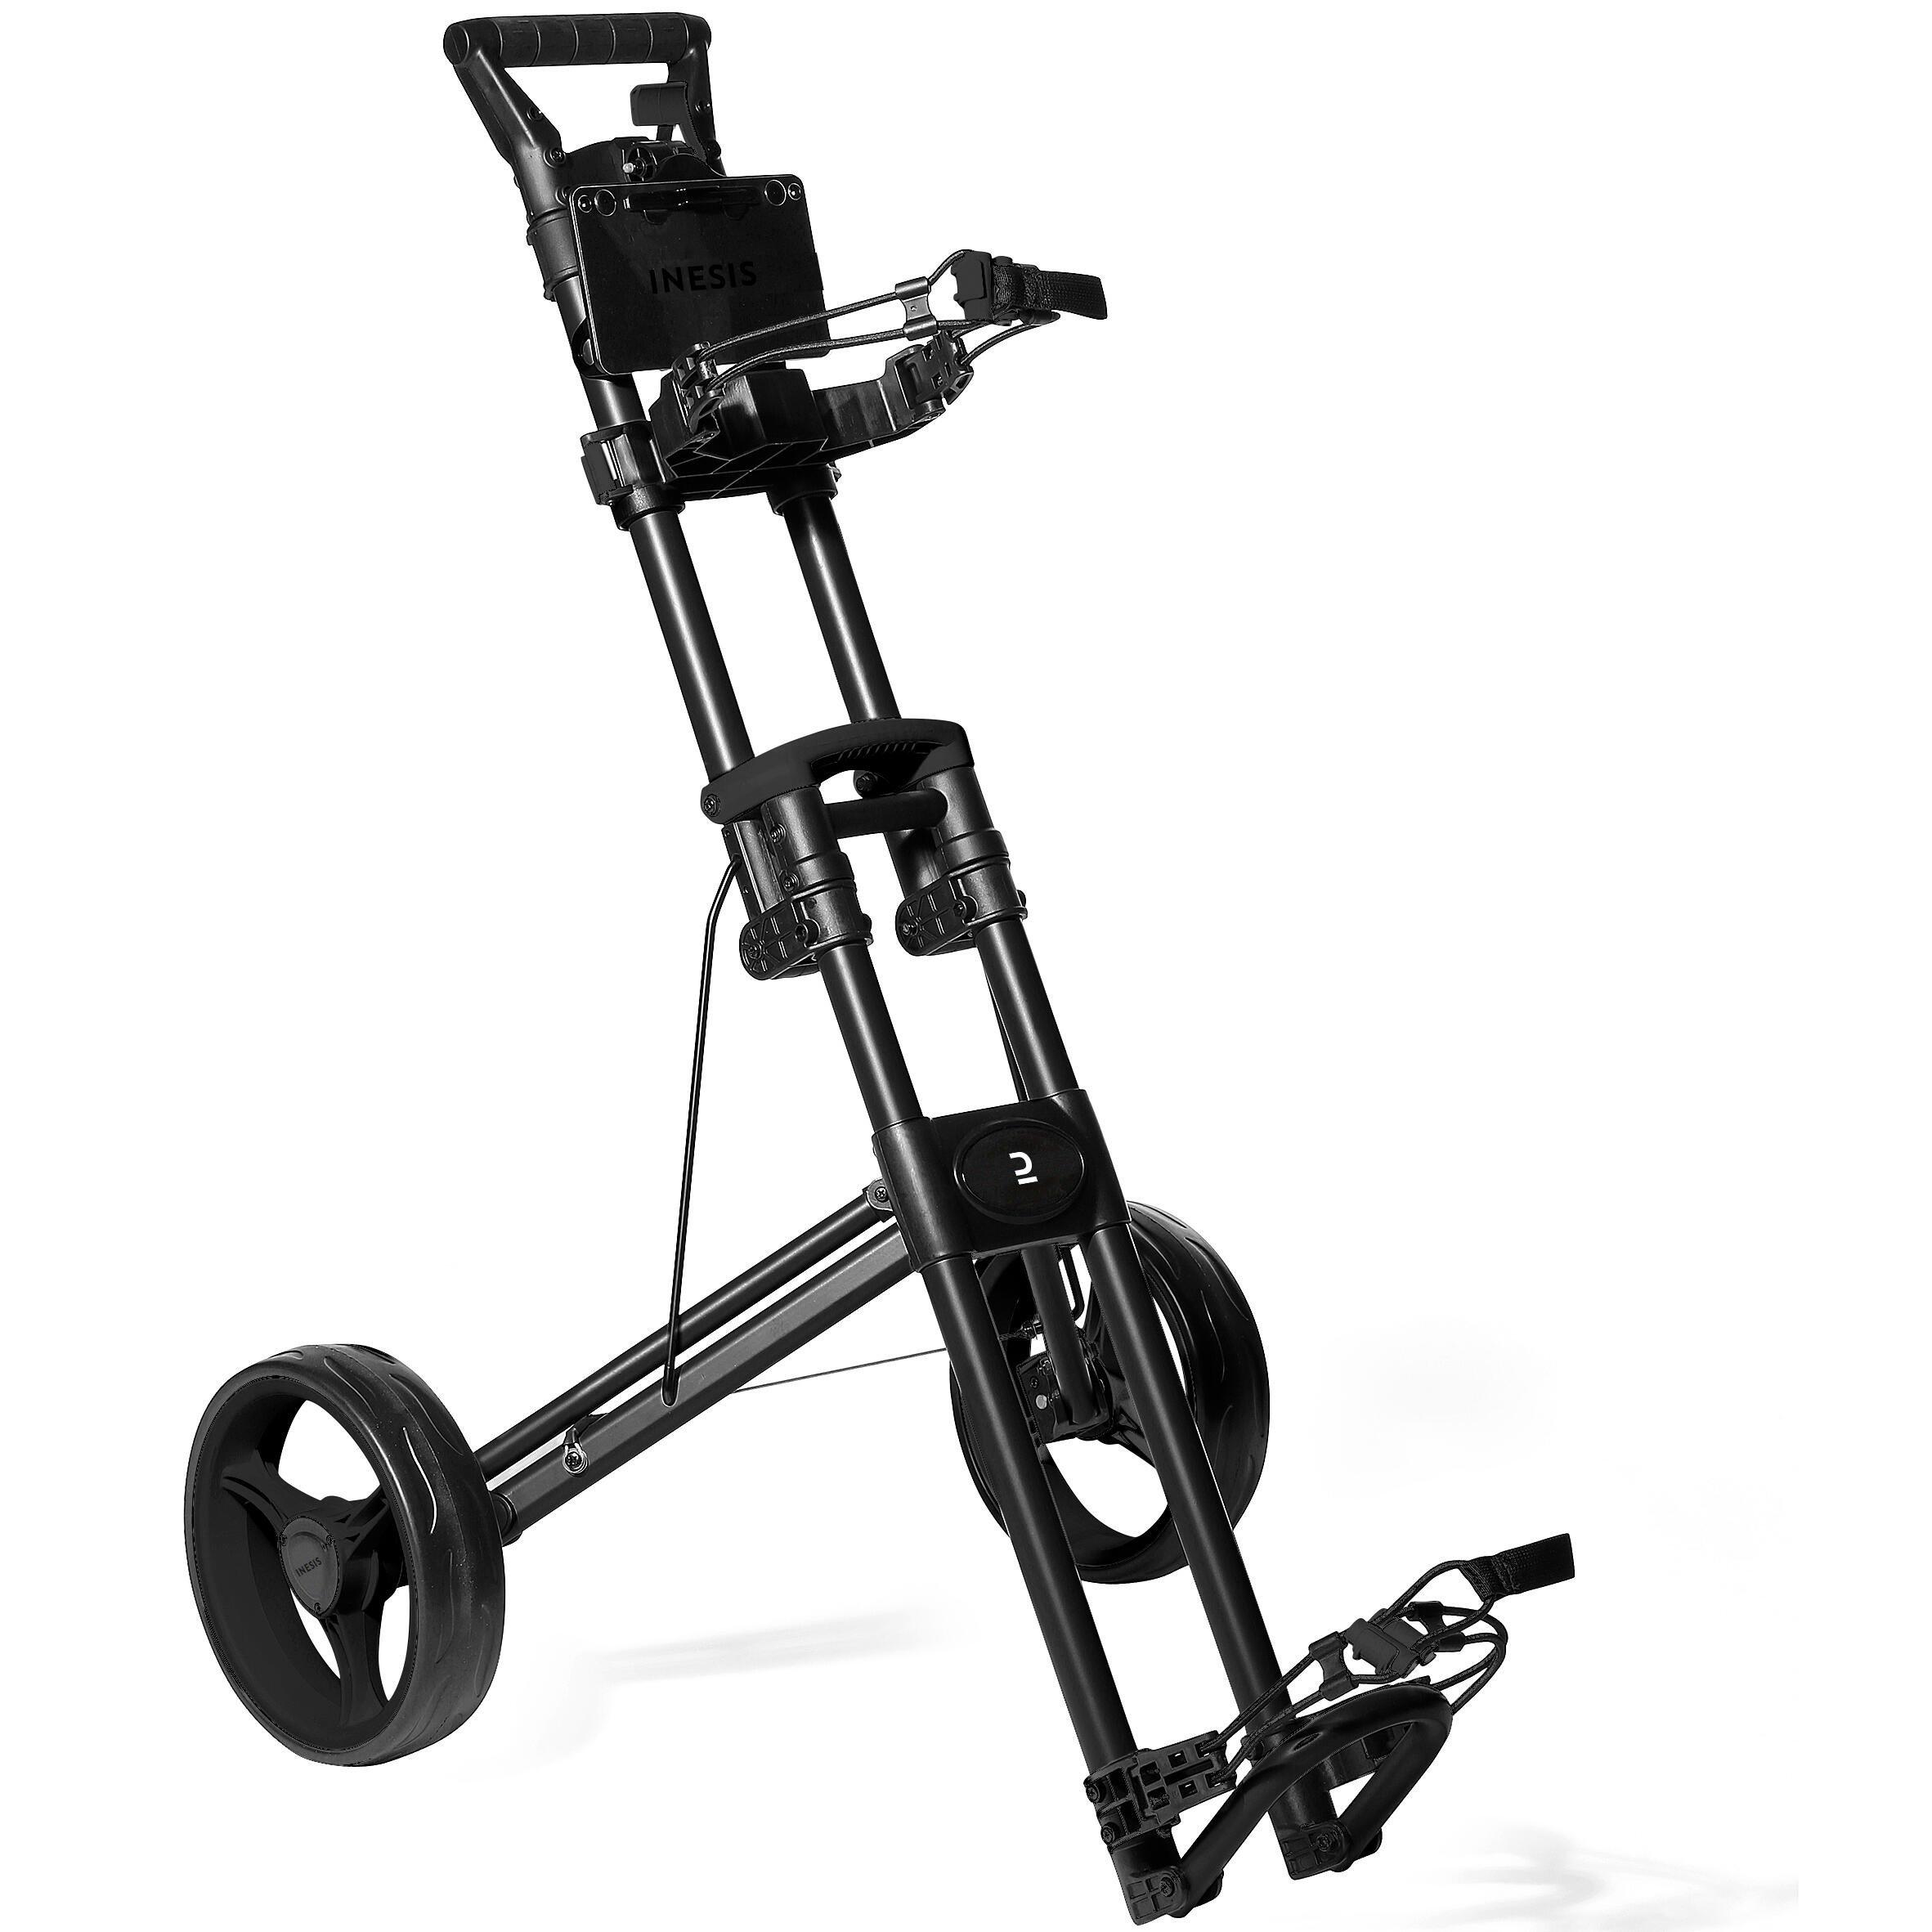 Decathlon 2-Wheel Compact Golf Trolley - Inesis